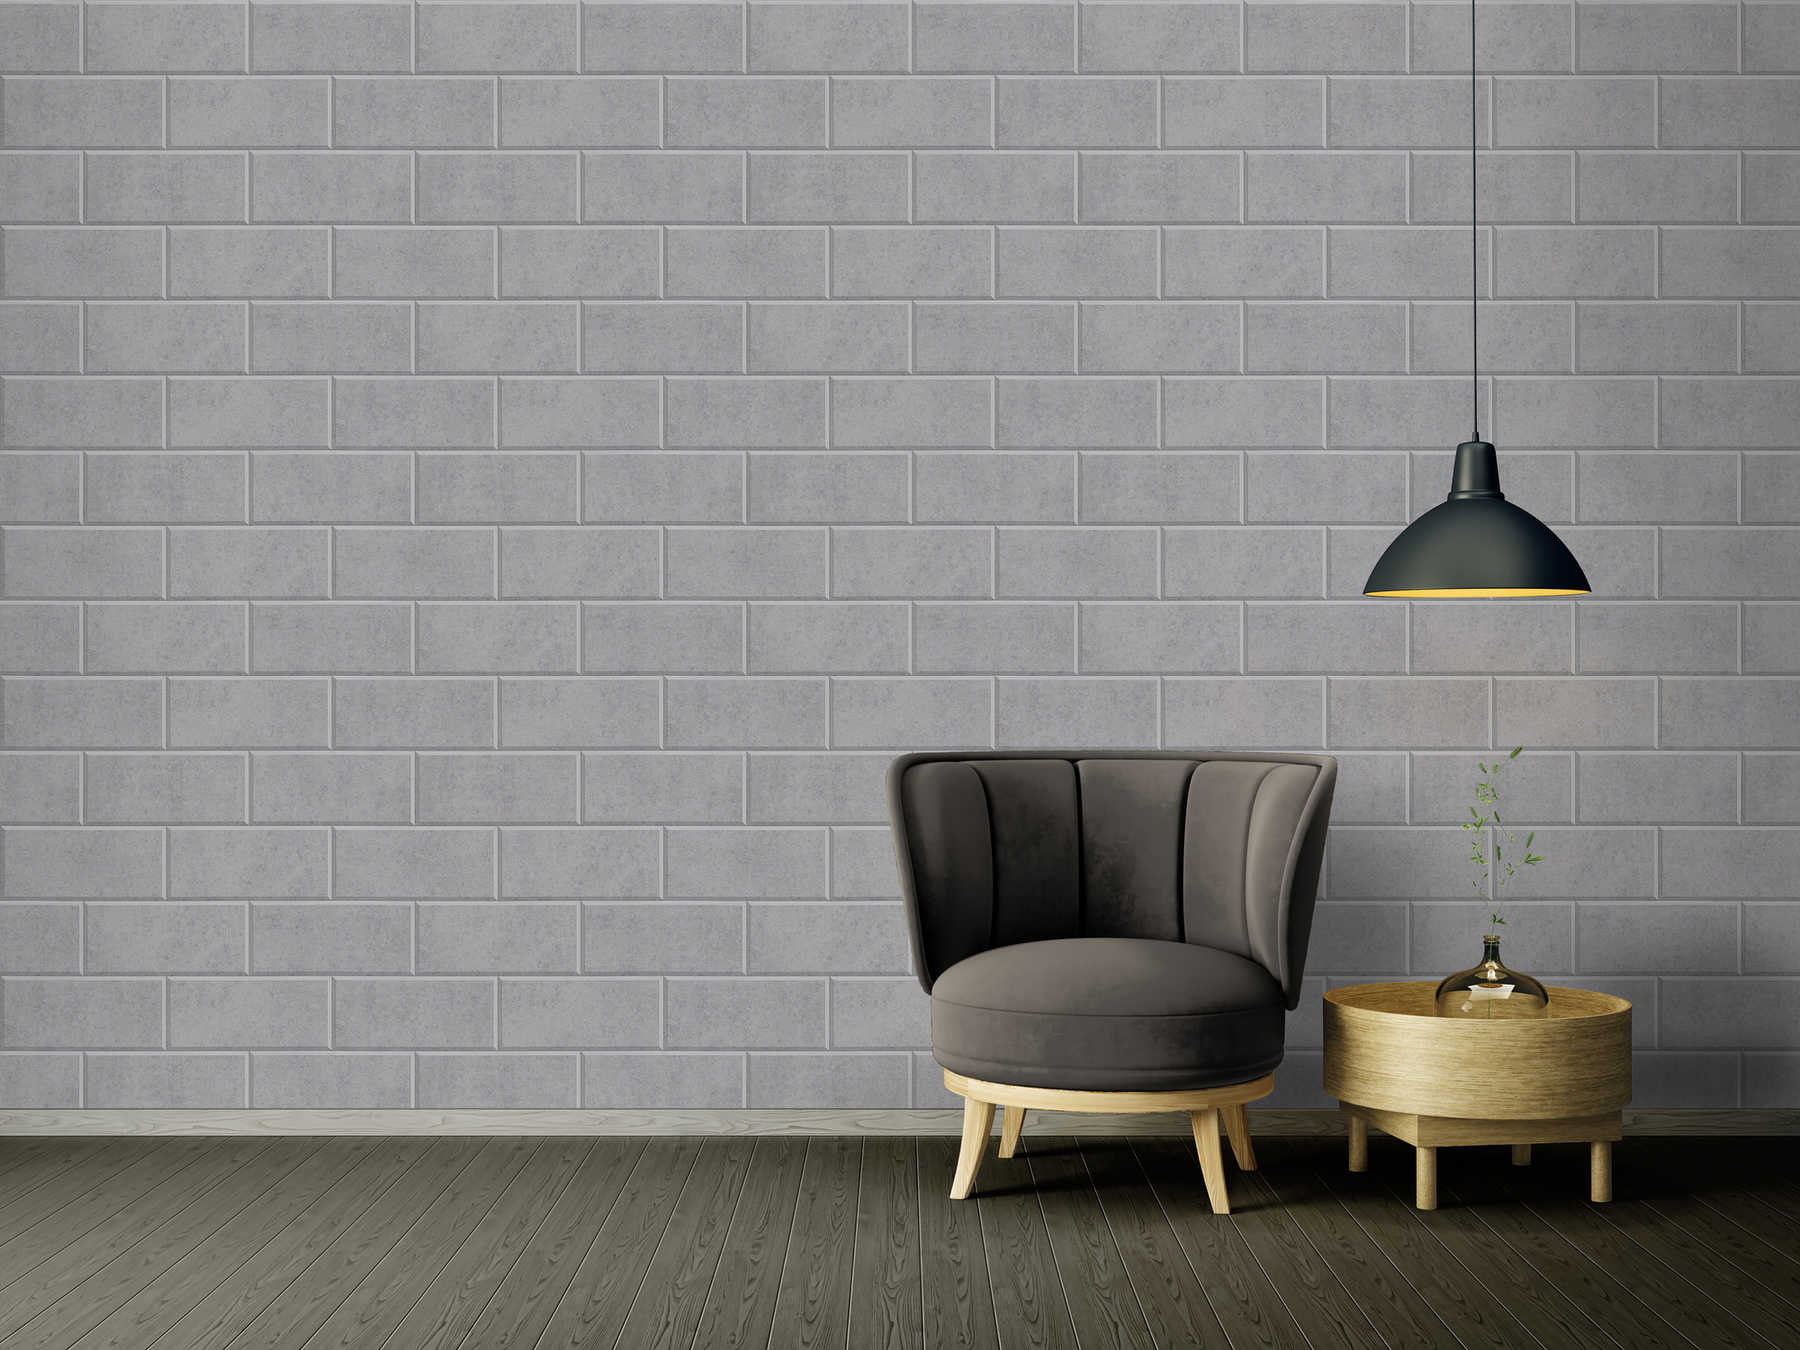             Wallpaper 3D stone wall design with concrete blocks - grey
        